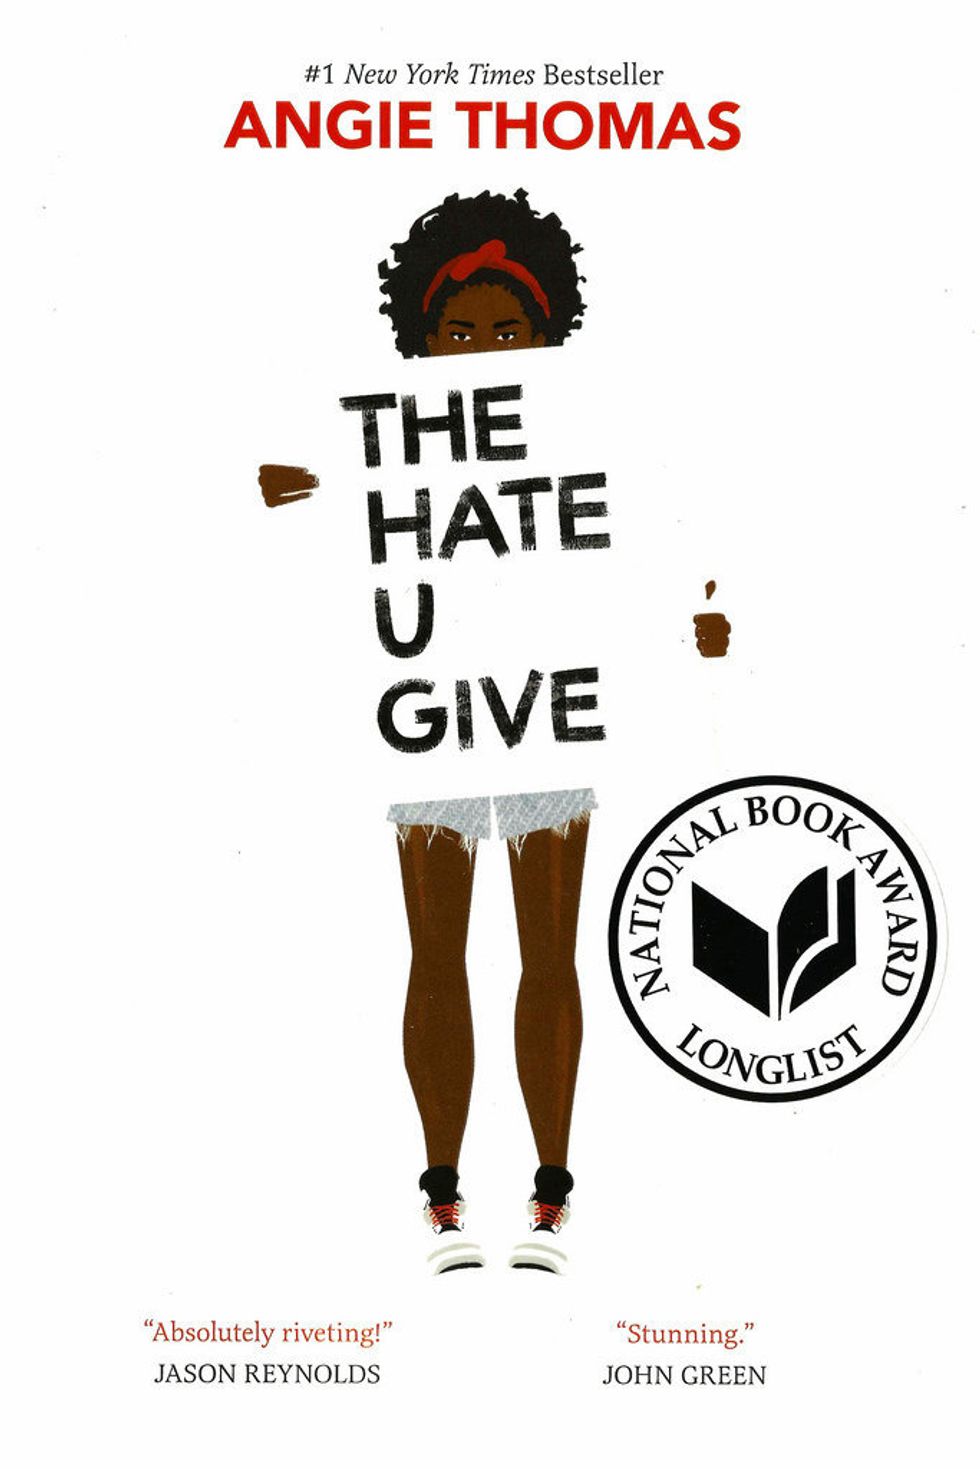 THUG: The Hate U Give